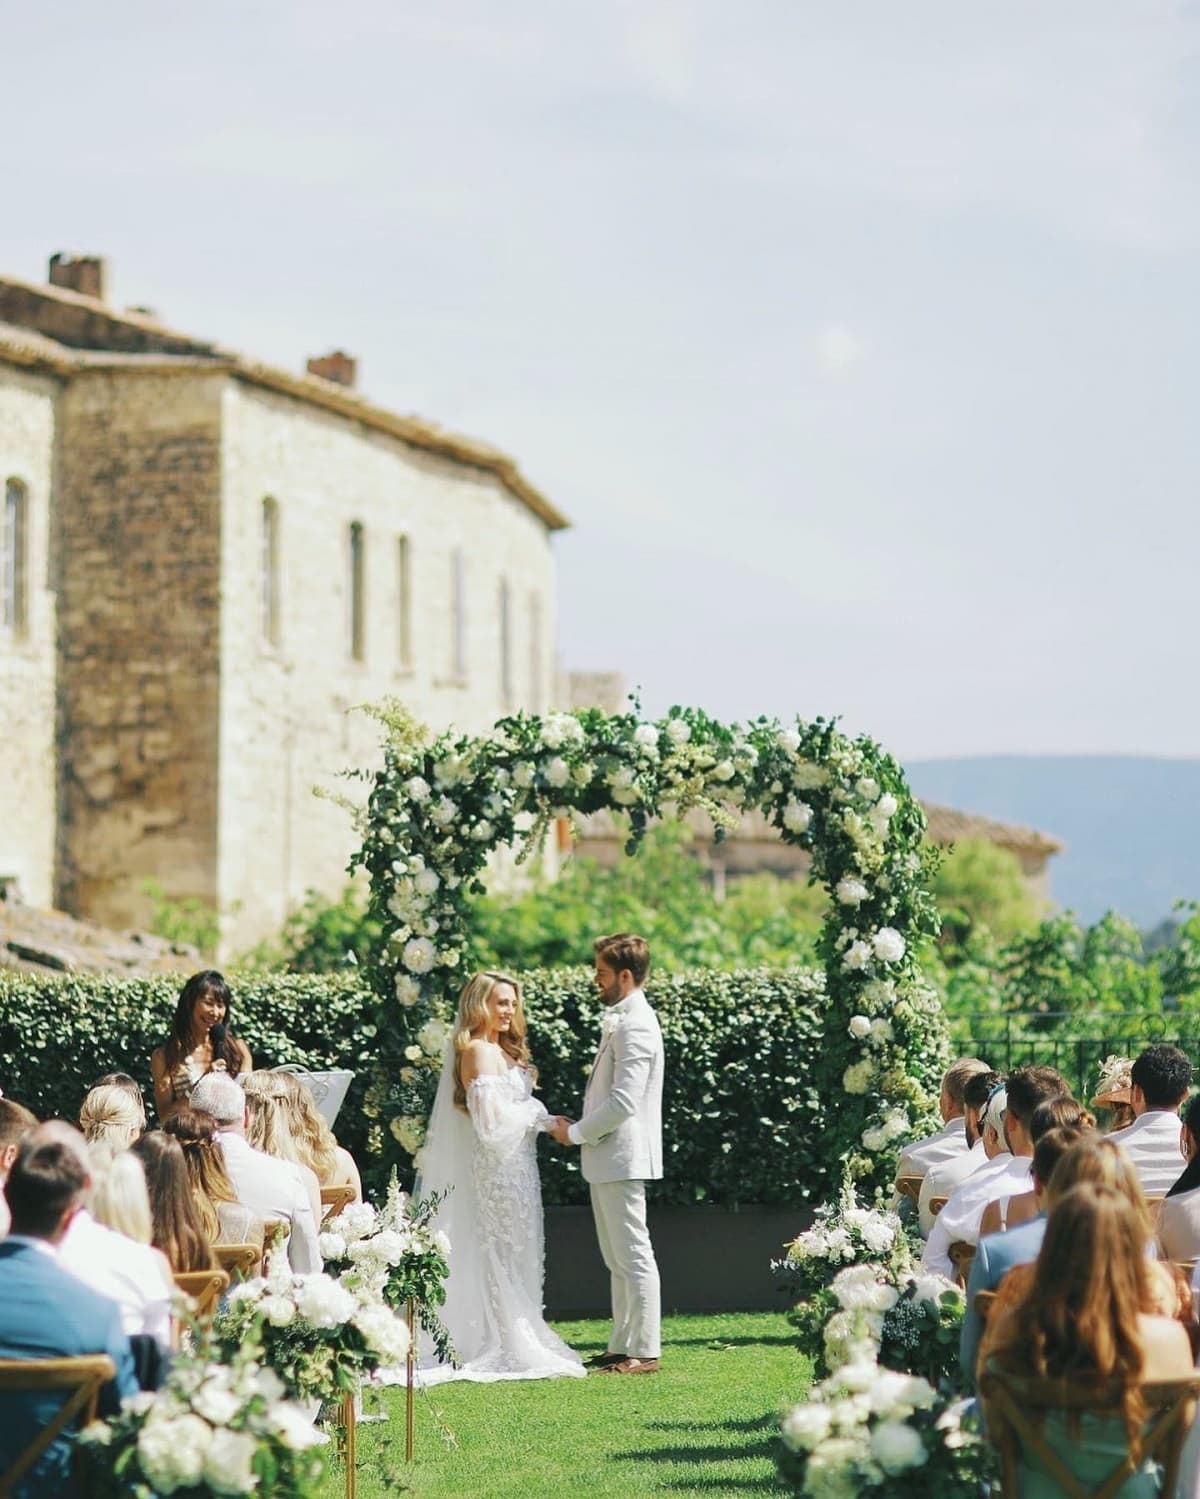 Wedding Celebrants in France - Unique Ceremonies